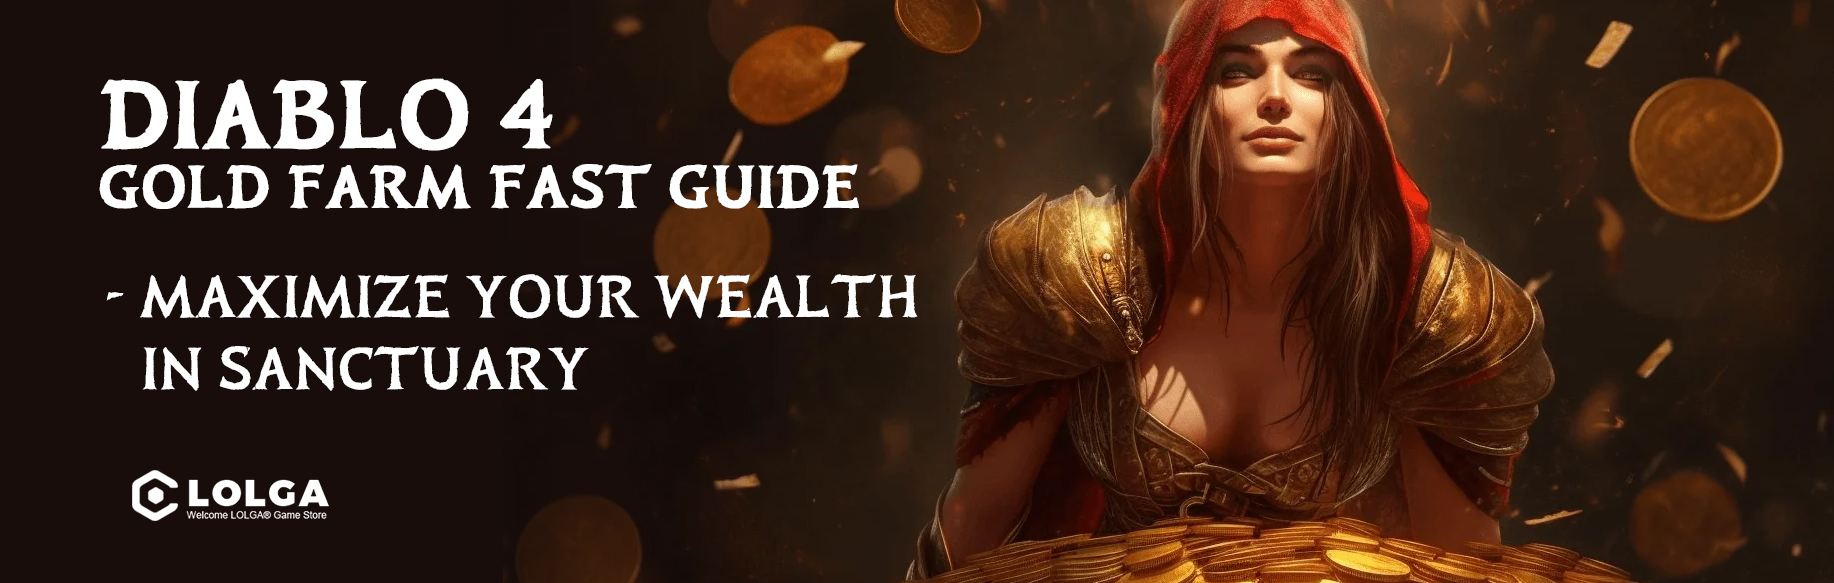  Diablo 4 Gold Farm Fast Guide - Maximize Your Wealth in Sanctuary